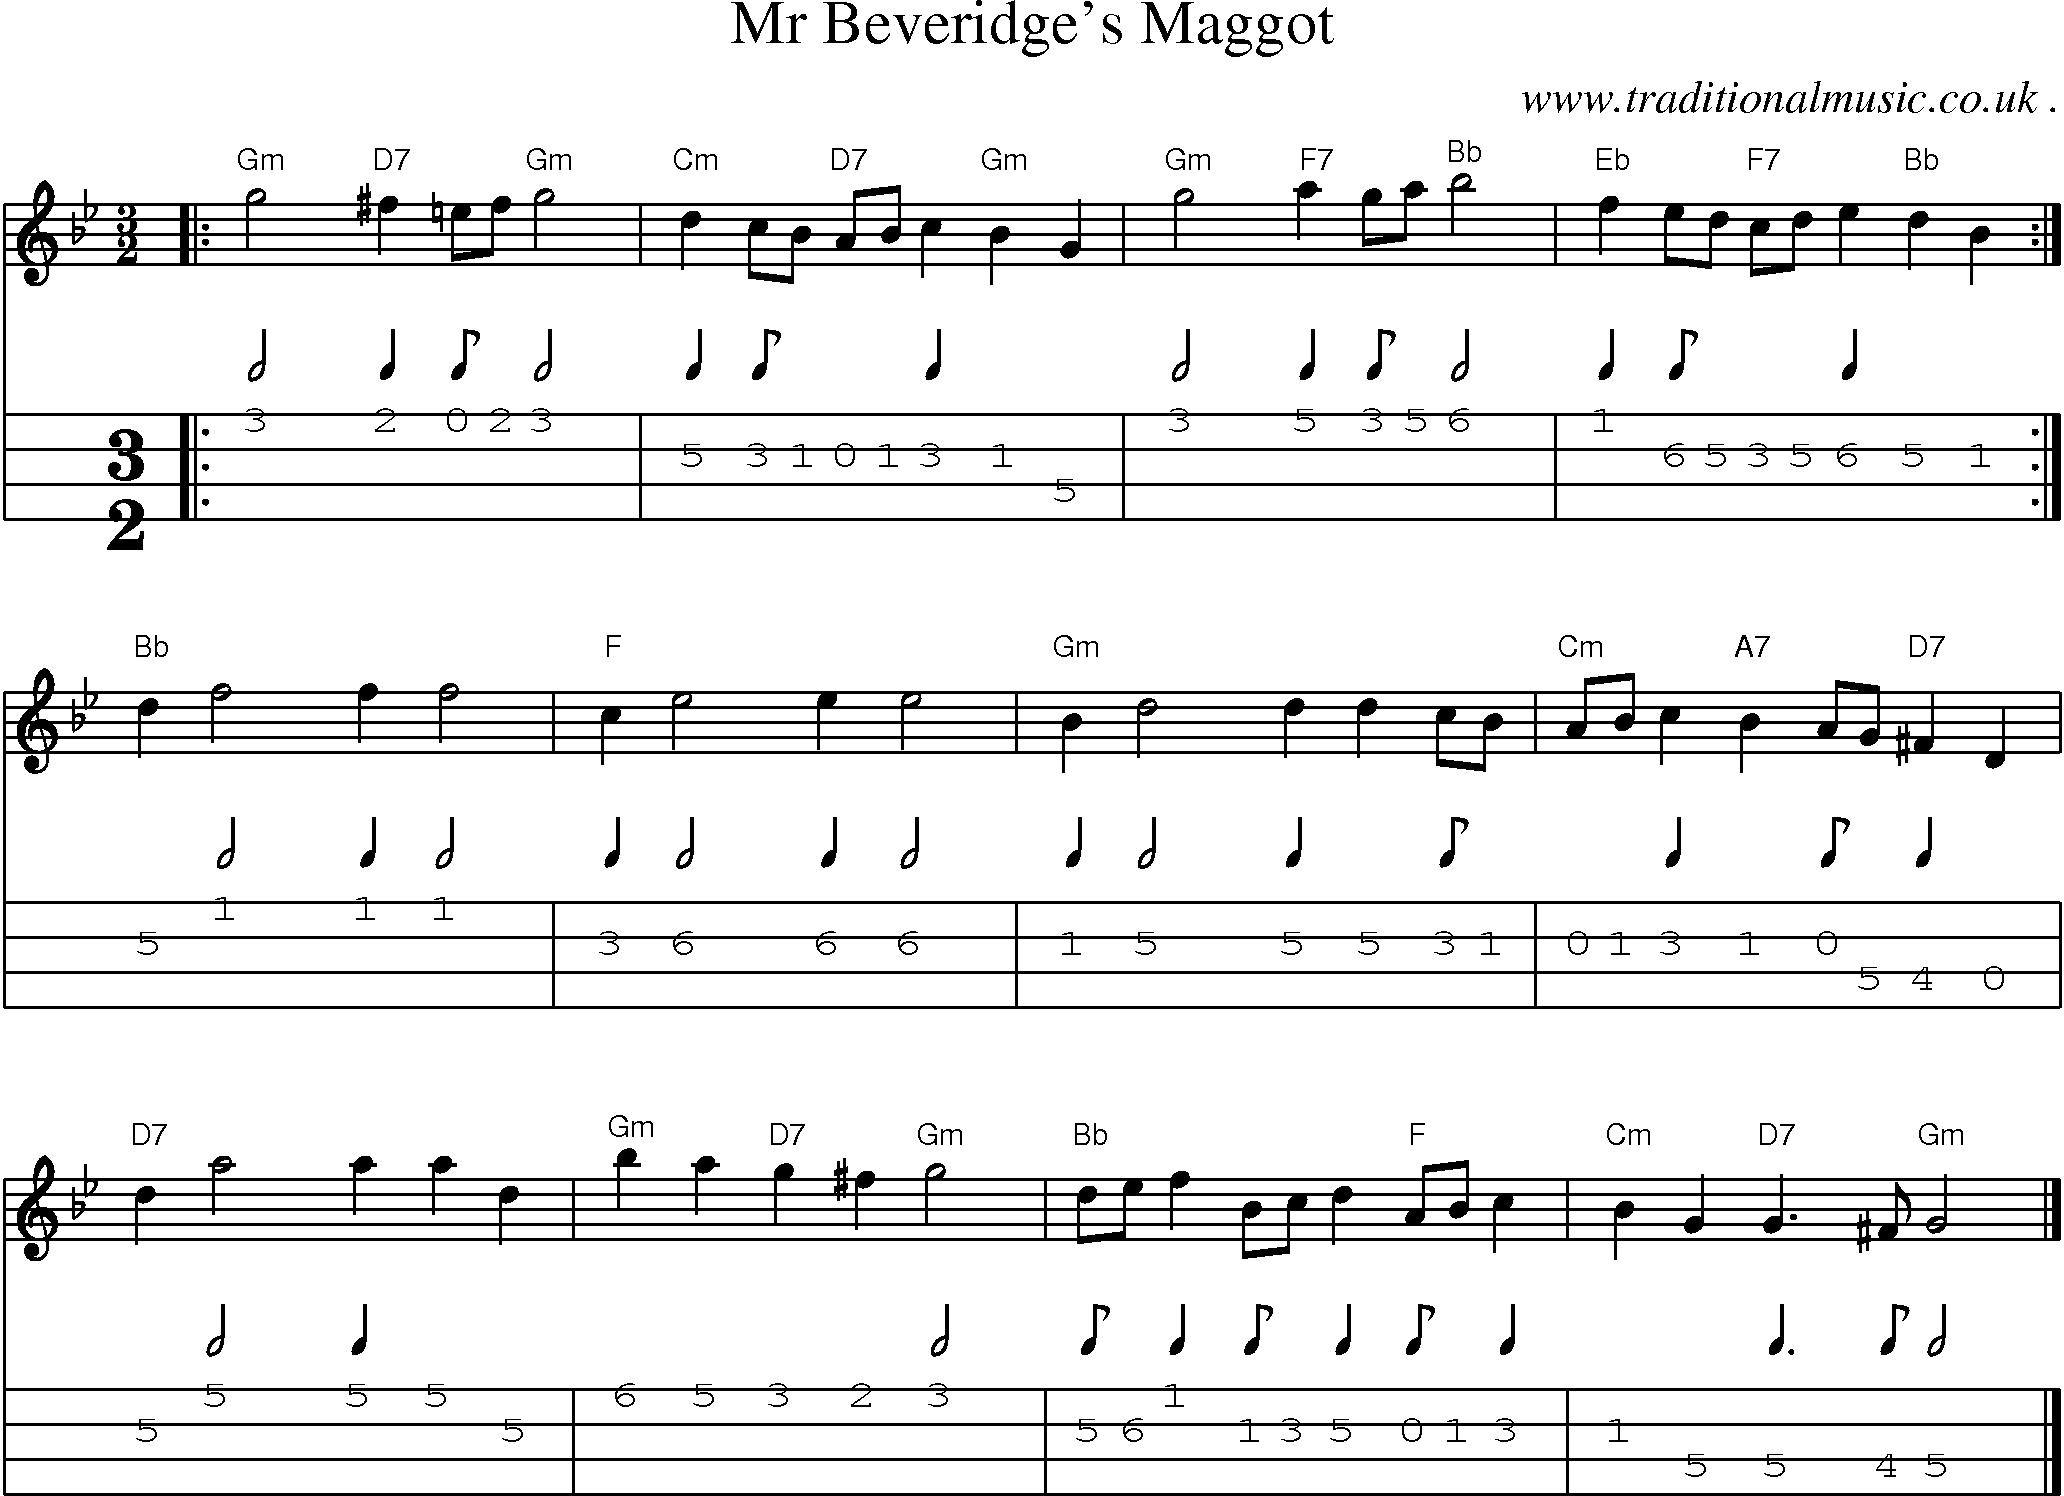 Music Score and Guitar Tabs for Mr Beveridges Maggot